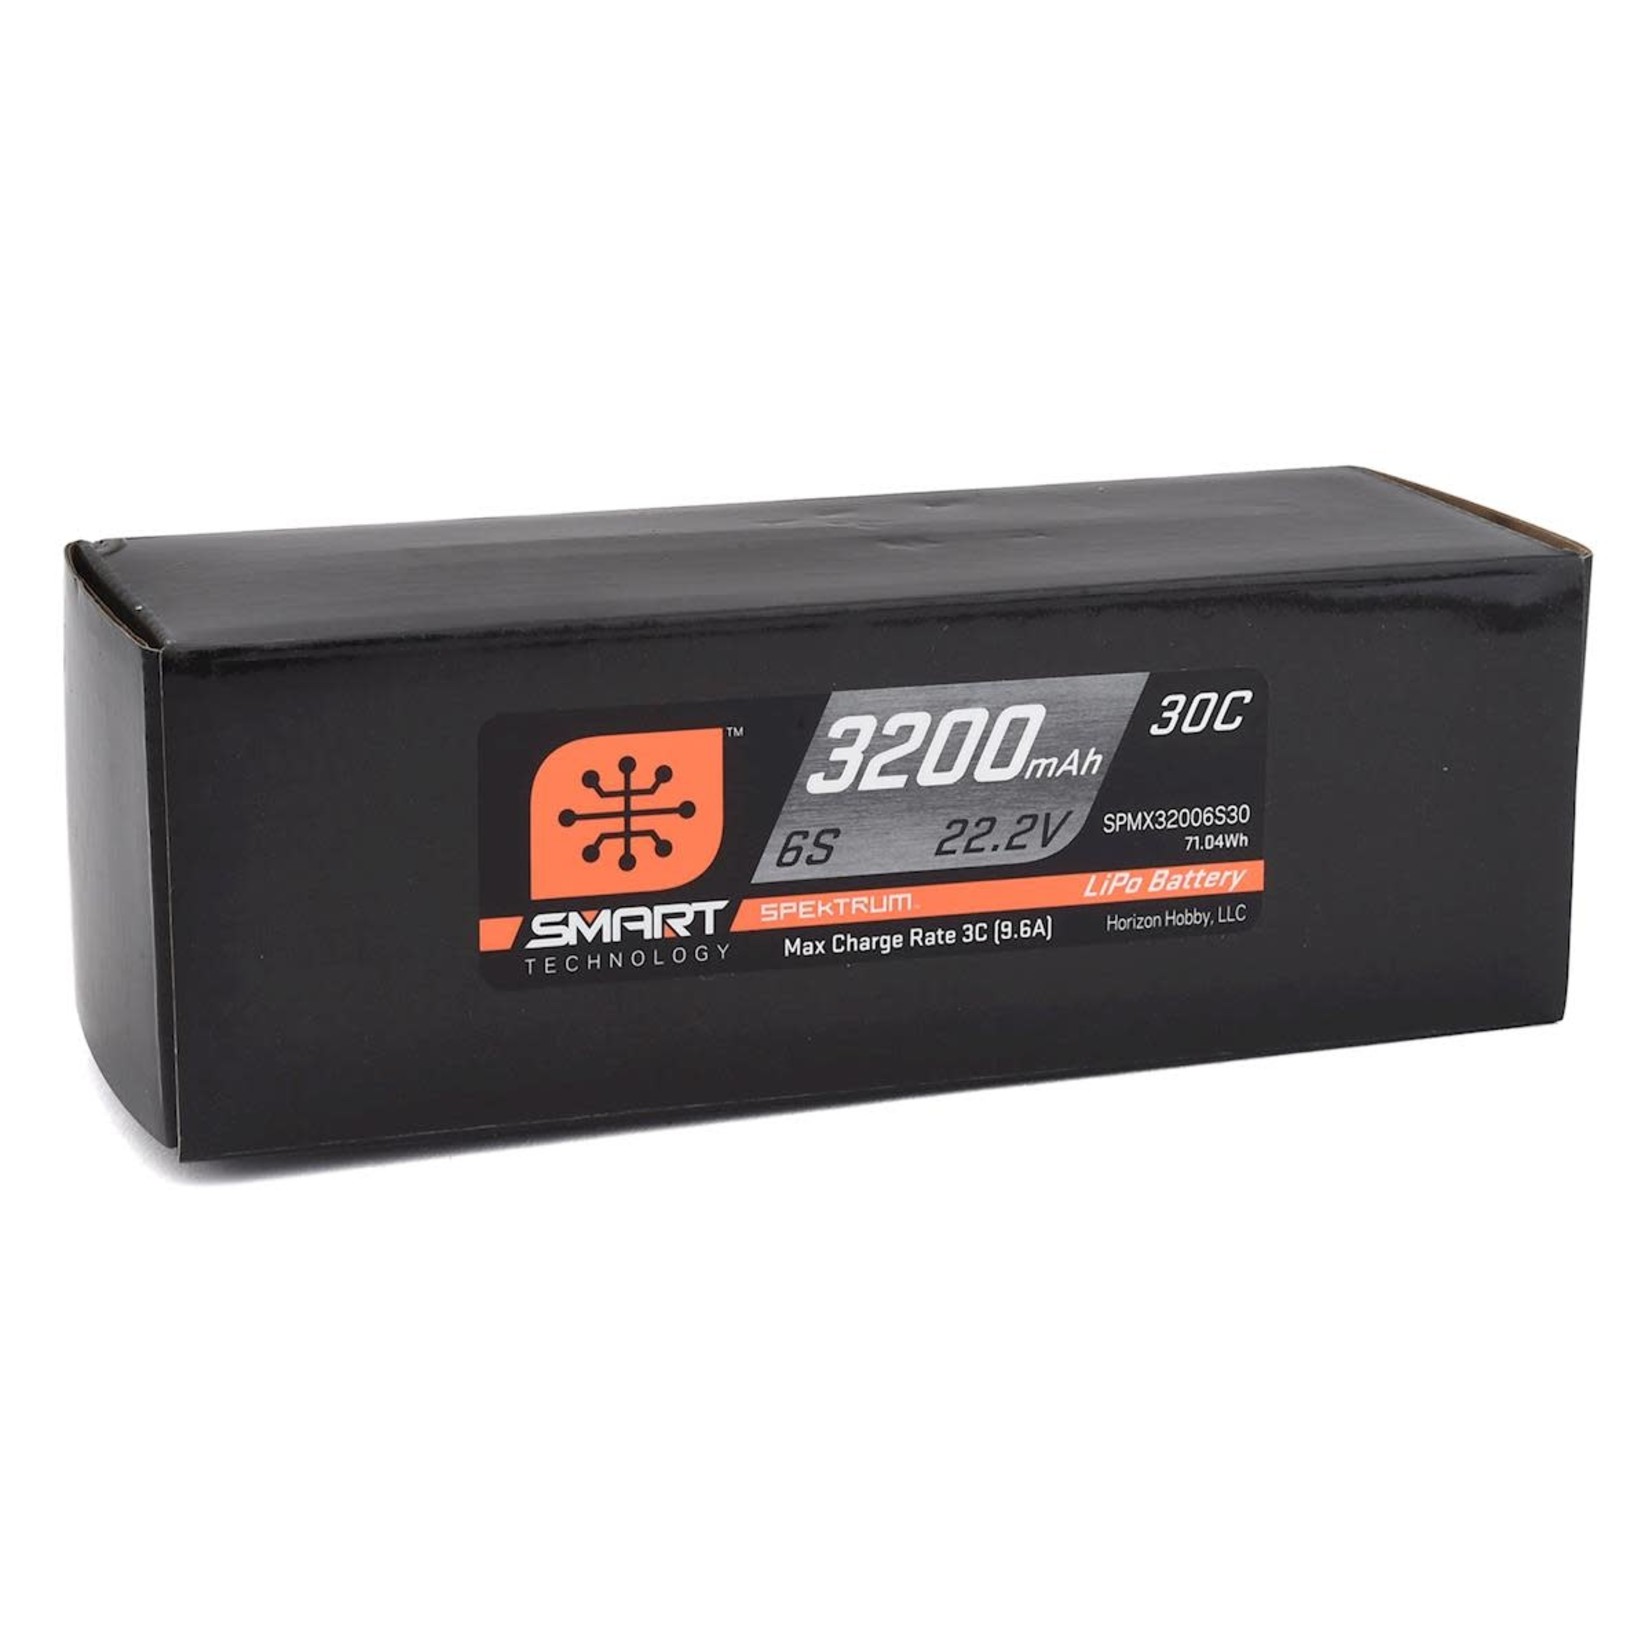 Spektrum Spektrum RC 6S Smart LiPo Battery Pack w/IC5 Connector (22.2V/3200mAh) #SPMX32006S30